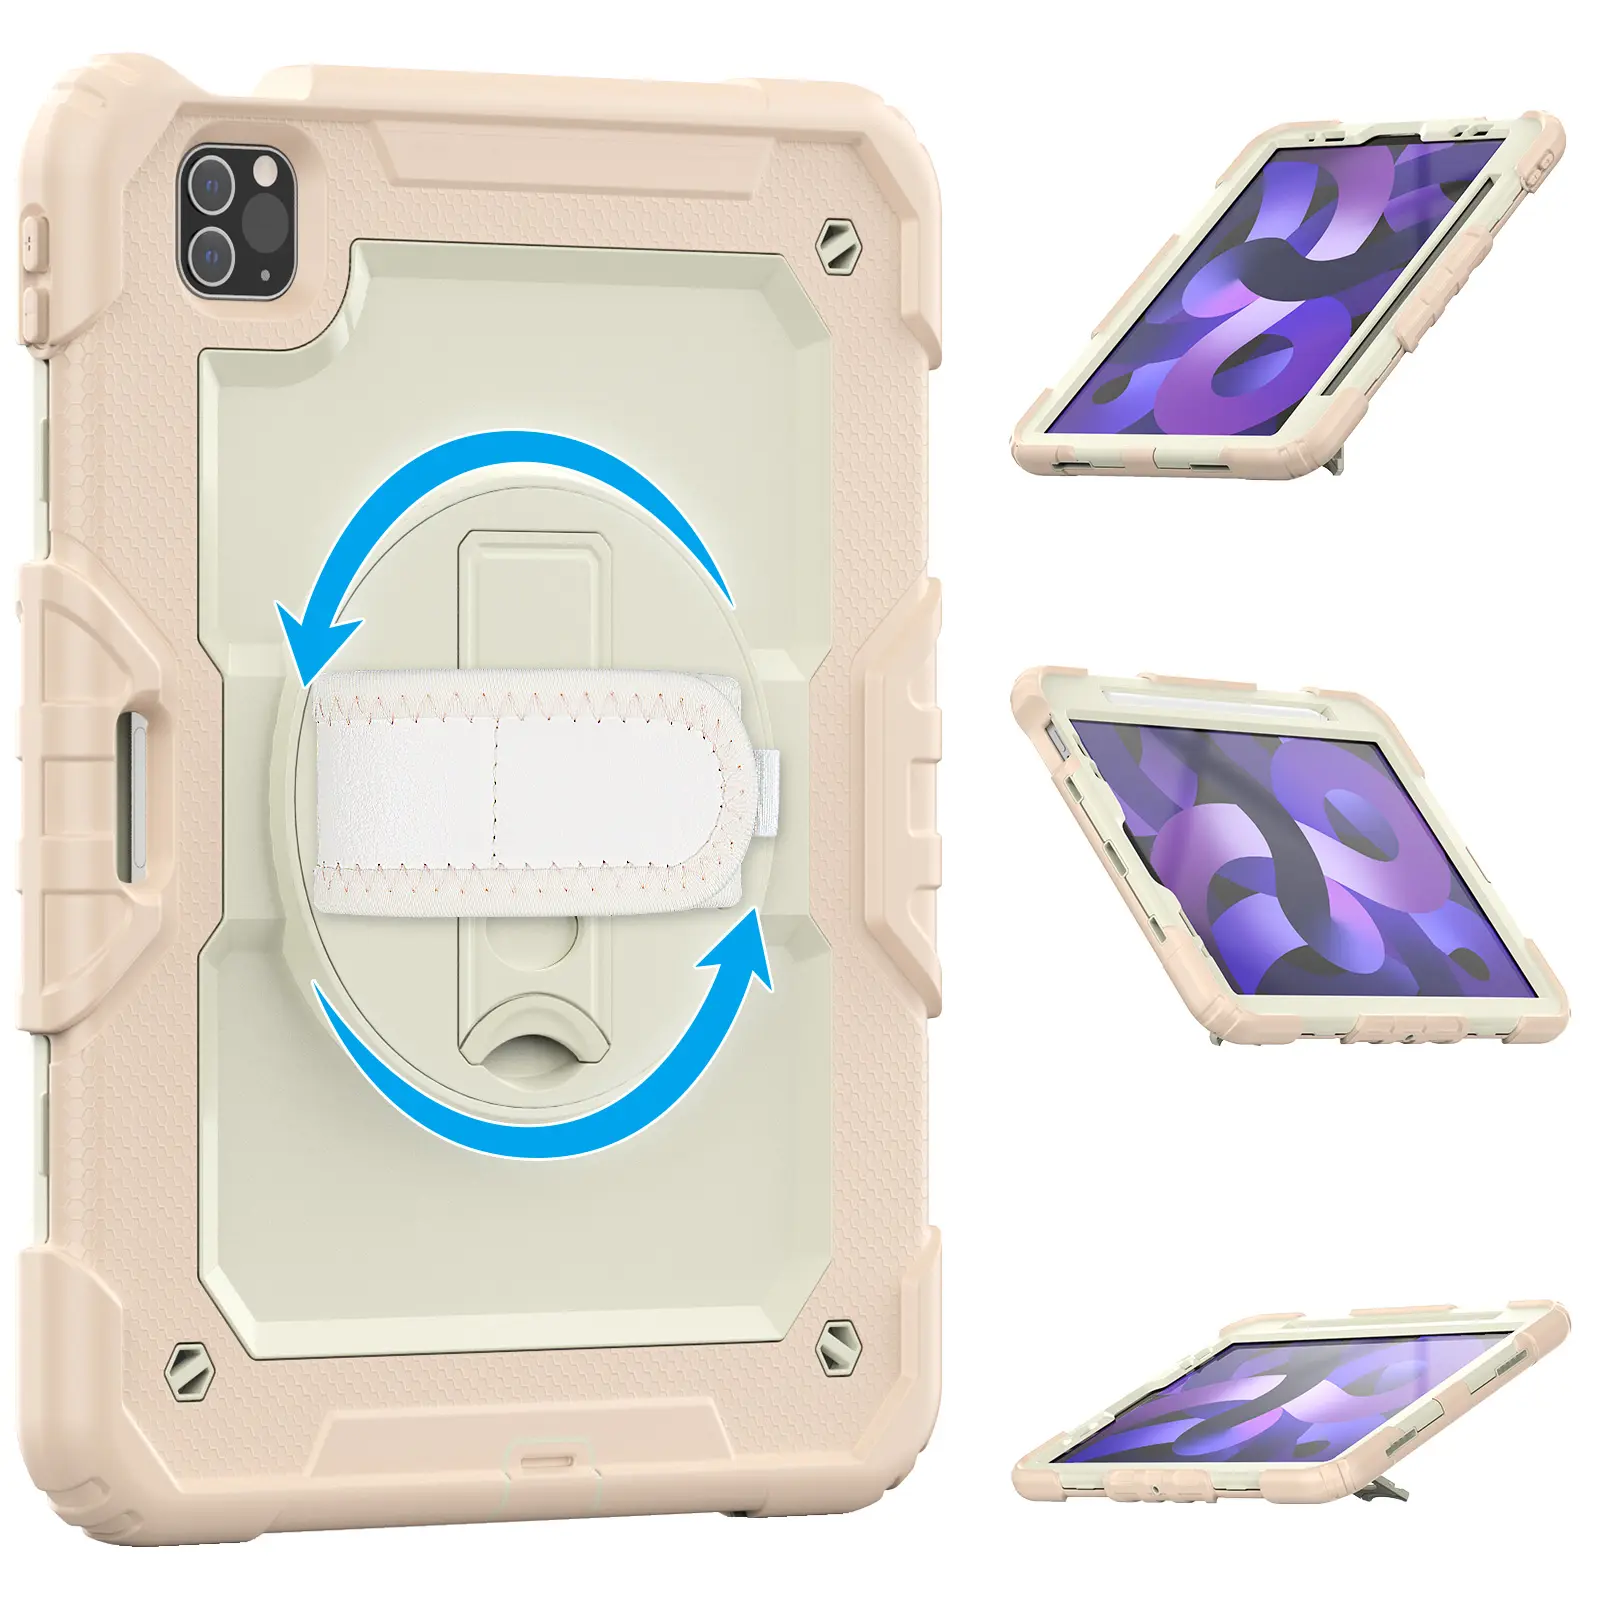 Ipad Mini 4 5 2015 2019 7.9360回転式ヘビーデューティタブレットカバー保護シェル用ハンドストラップアーマーケース